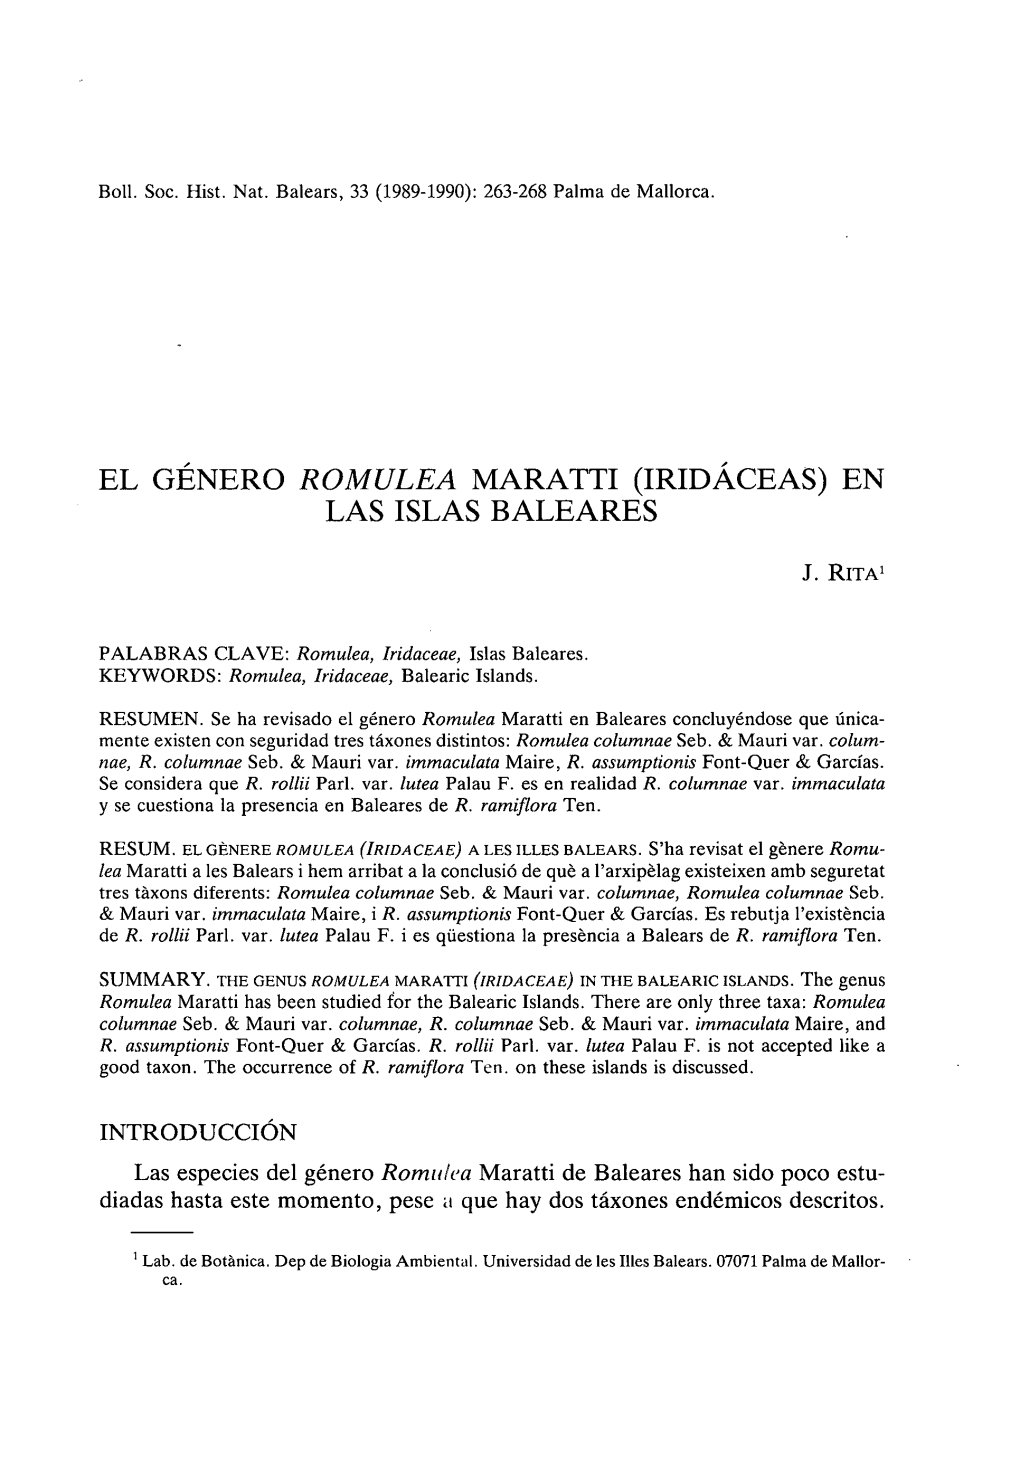 El Género Romulea Maratti (Iridáceas) En Las Islas Baleares